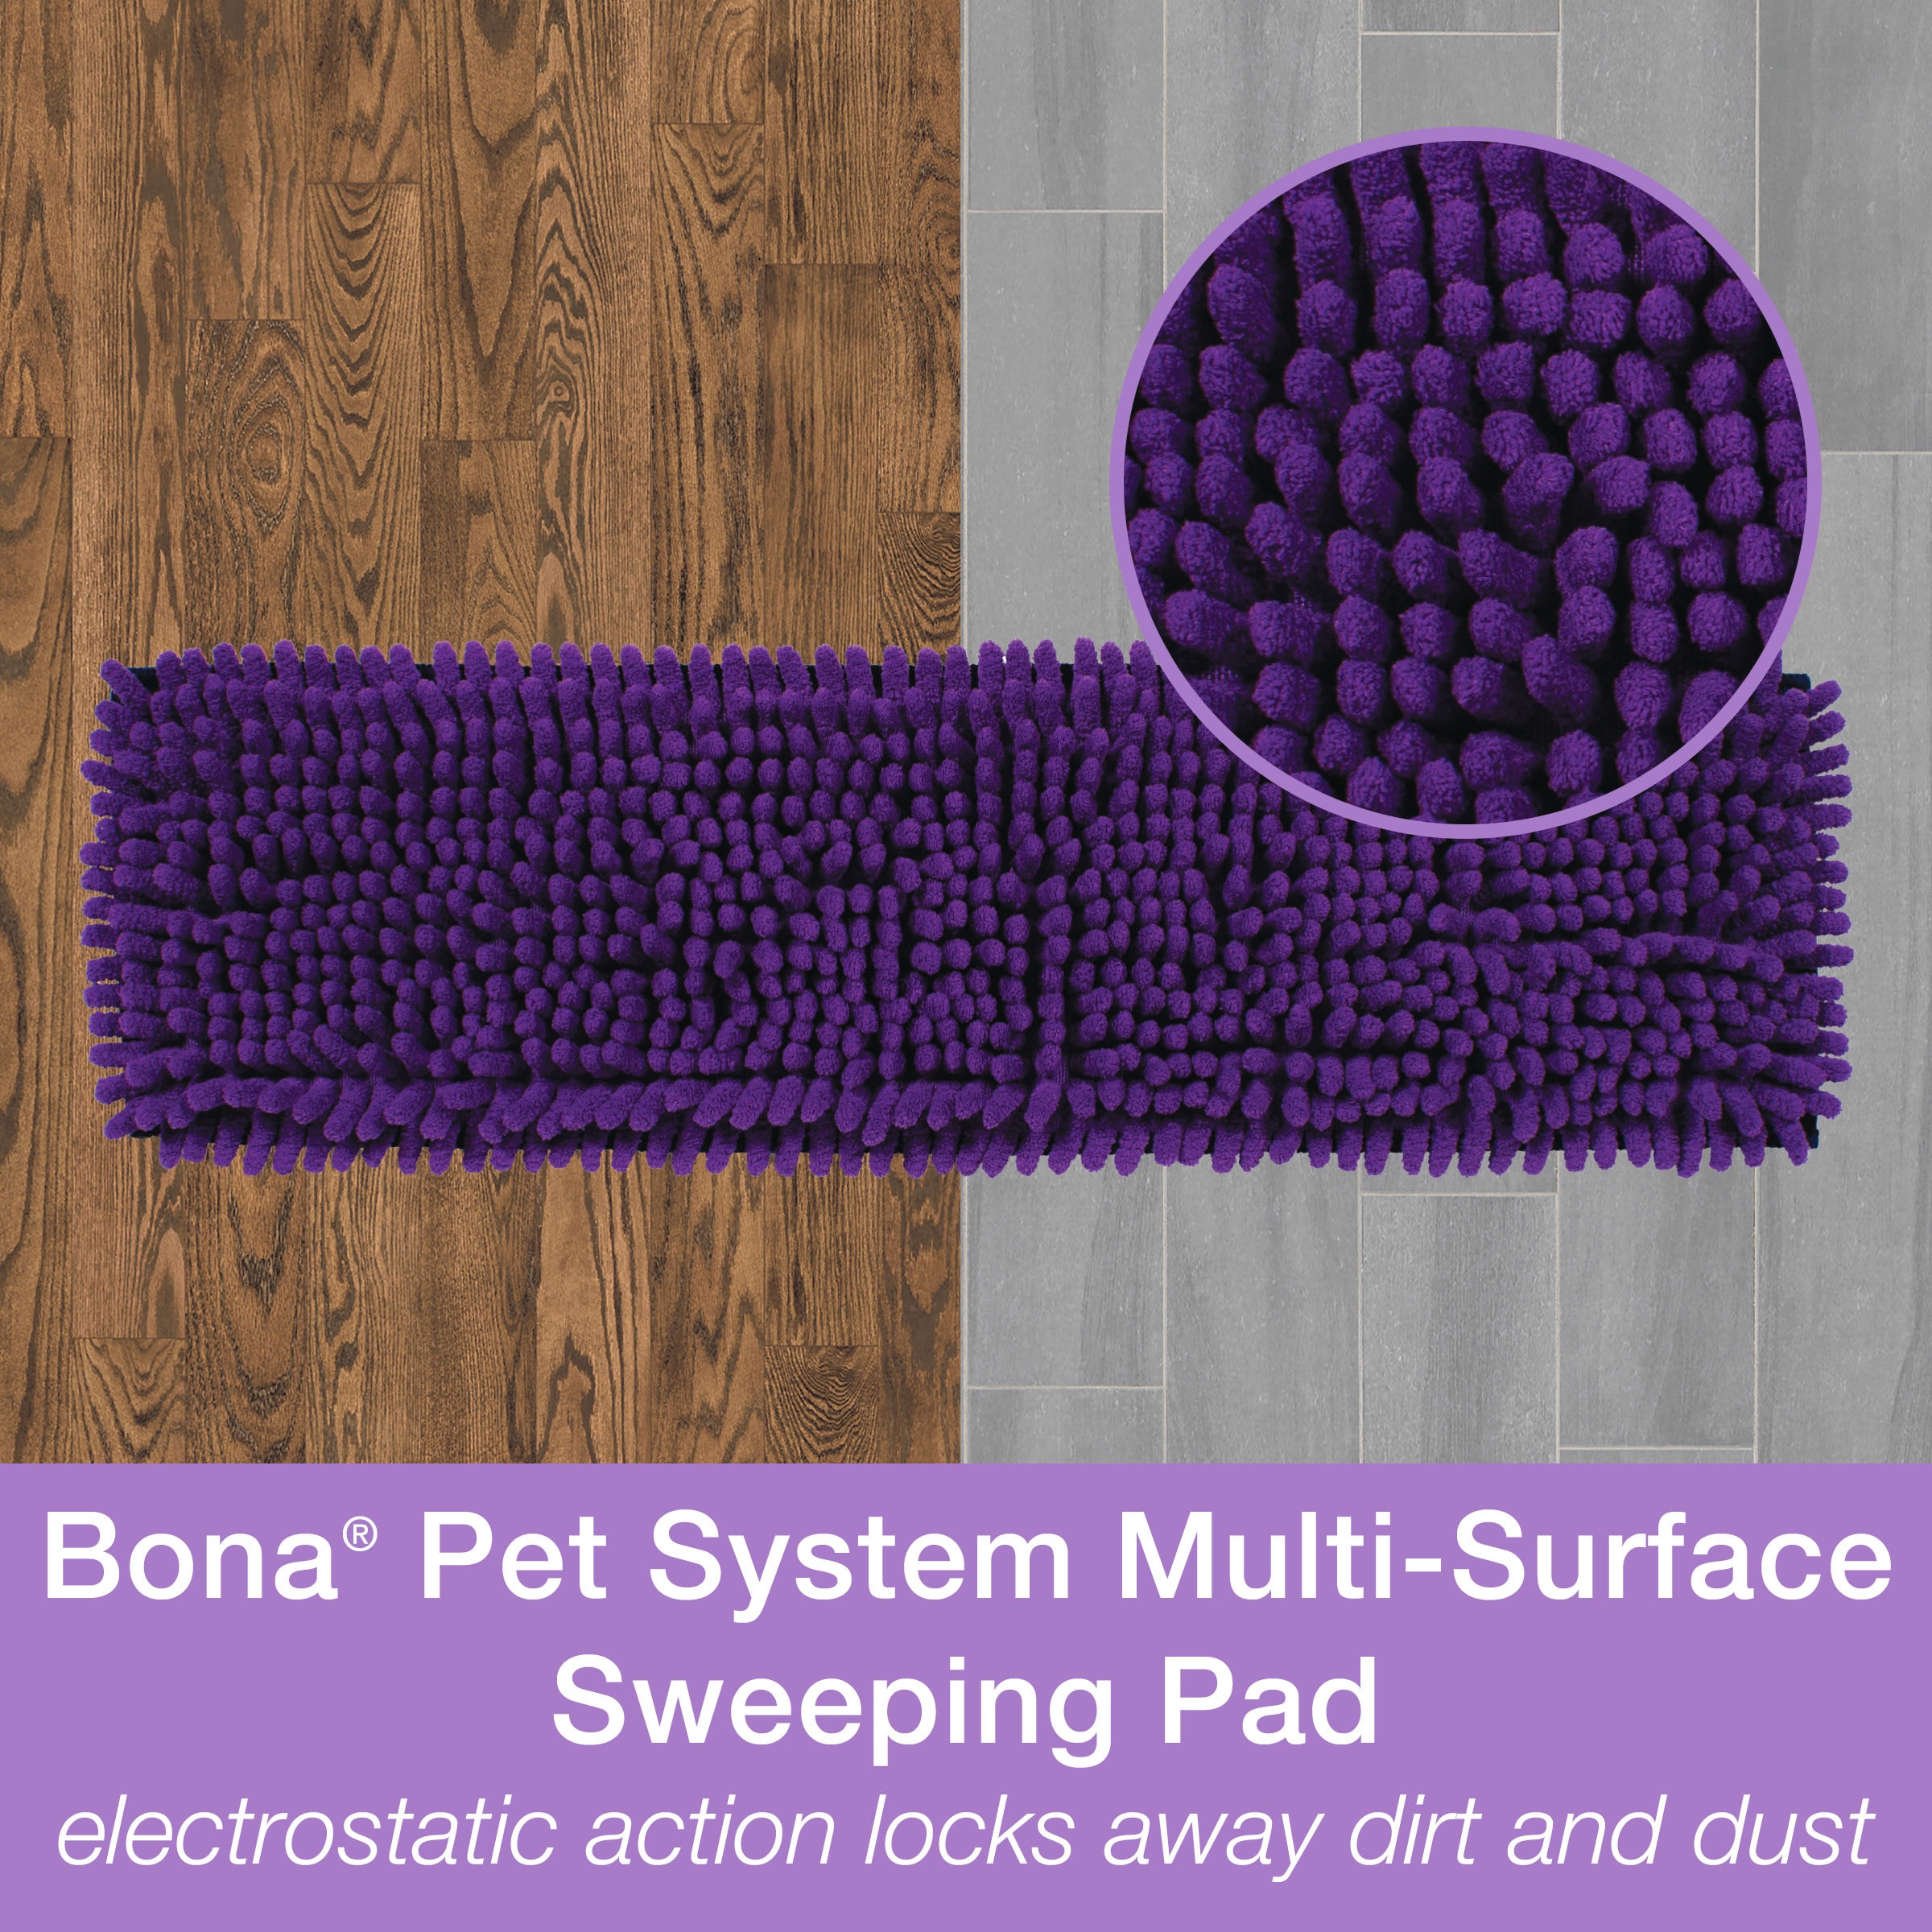 Bona® Pet System Premium Pet Microfiber Mop for Multi-Surface Floors